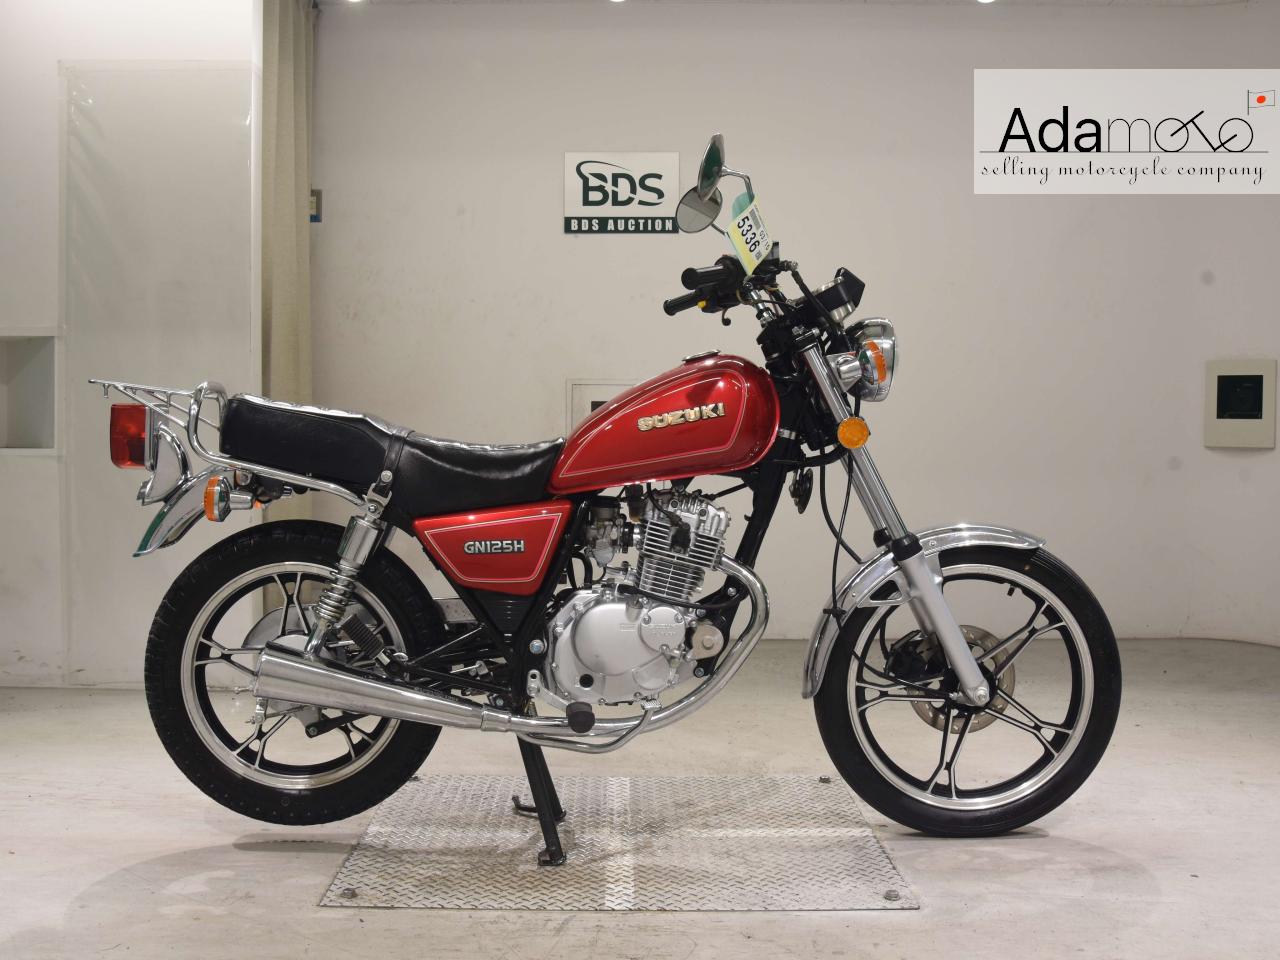 Suzuki GN125H - Adamoto - Motorcycles from Japan